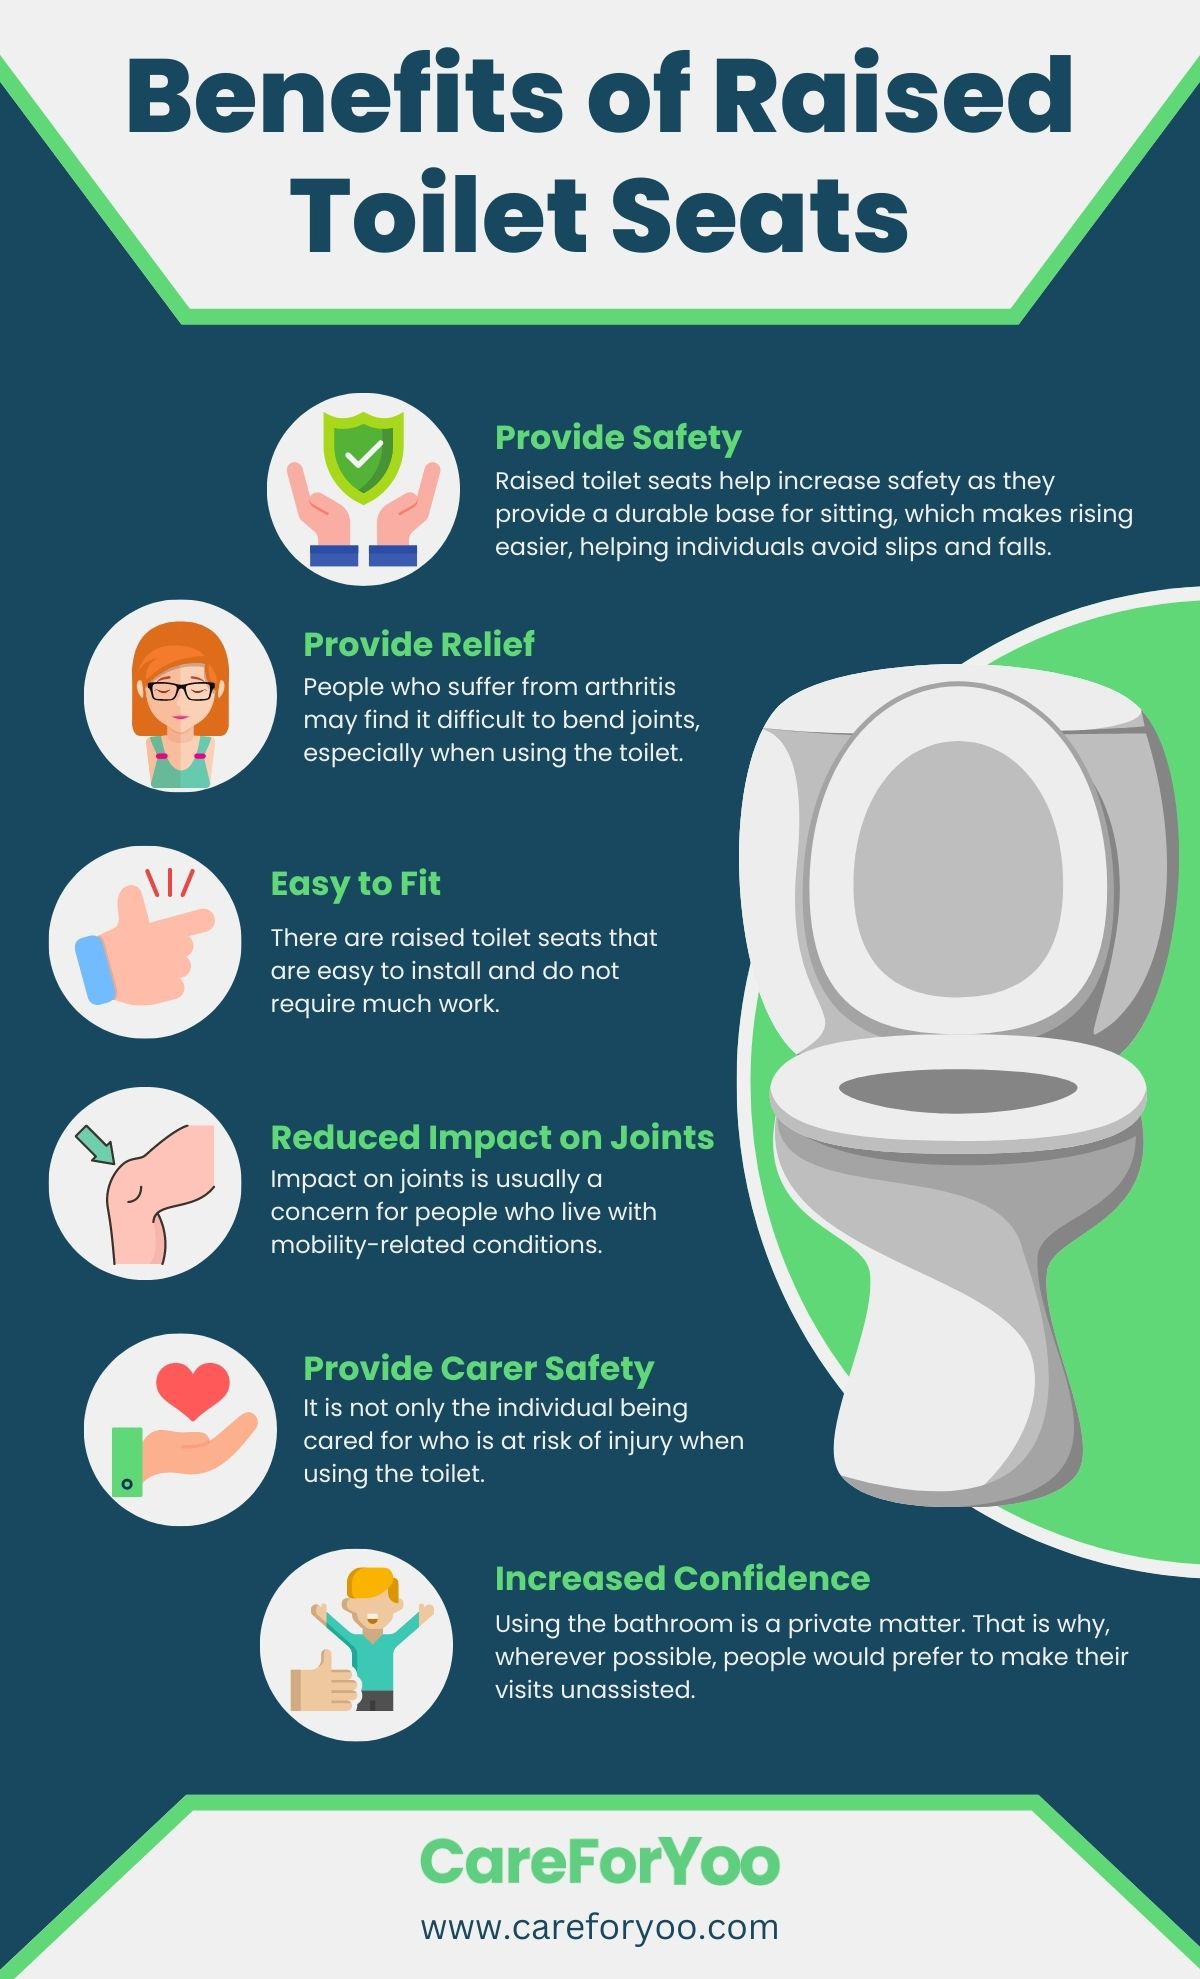 Benefits of Raised Toilet Seats